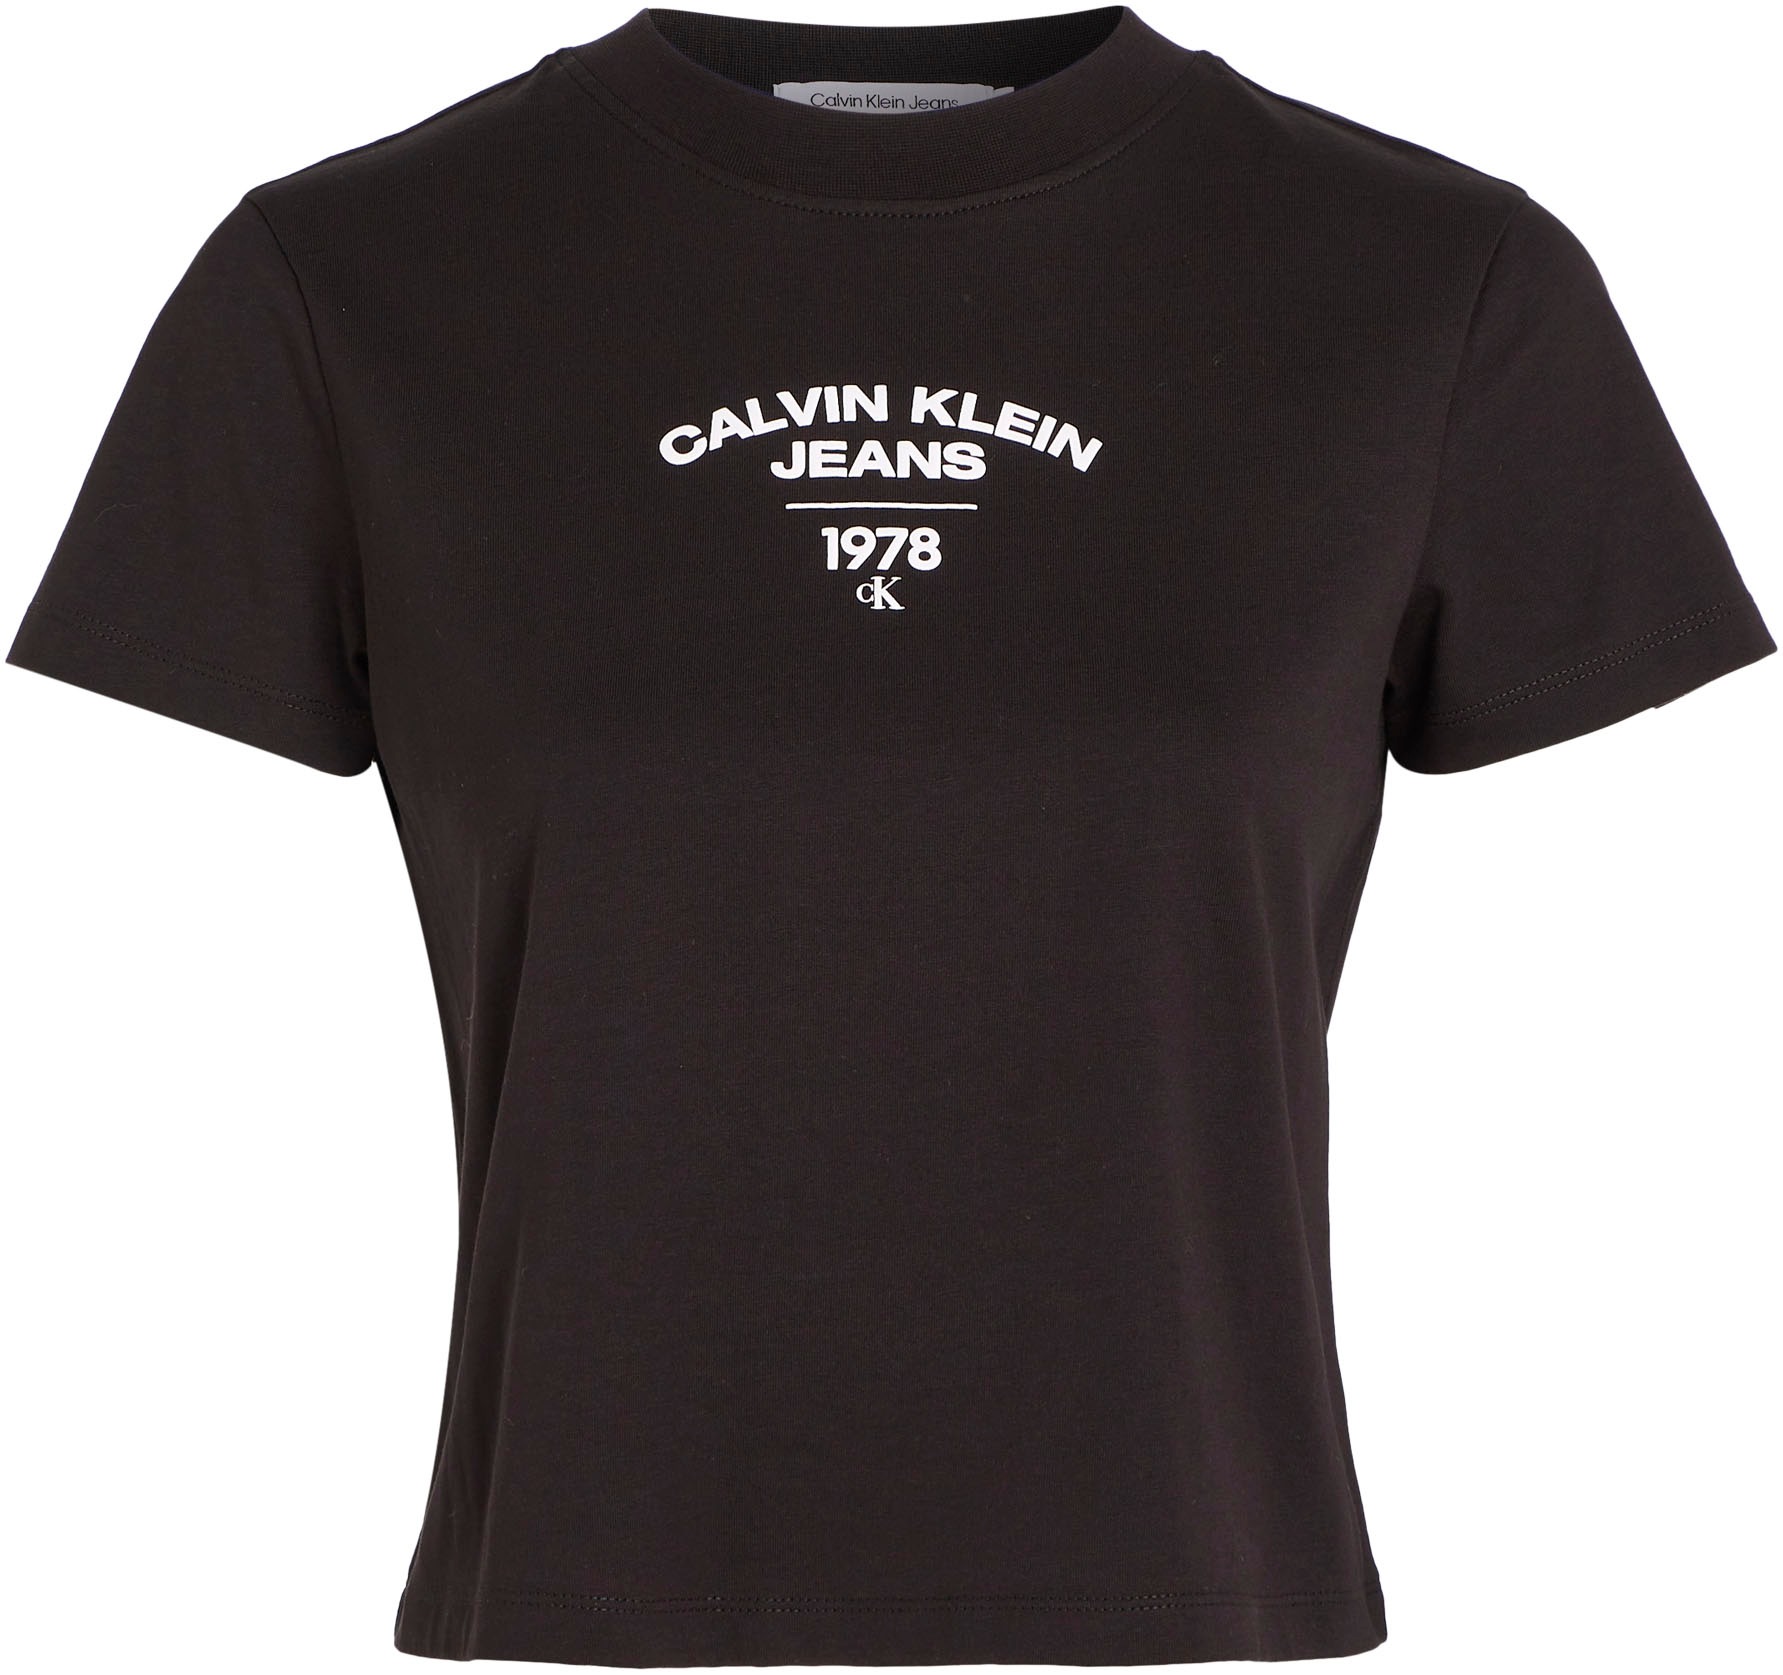 »VARSITY I\'m TEE« Klein BABY Jeans walking shoppen LOGO T-Shirt | Calvin